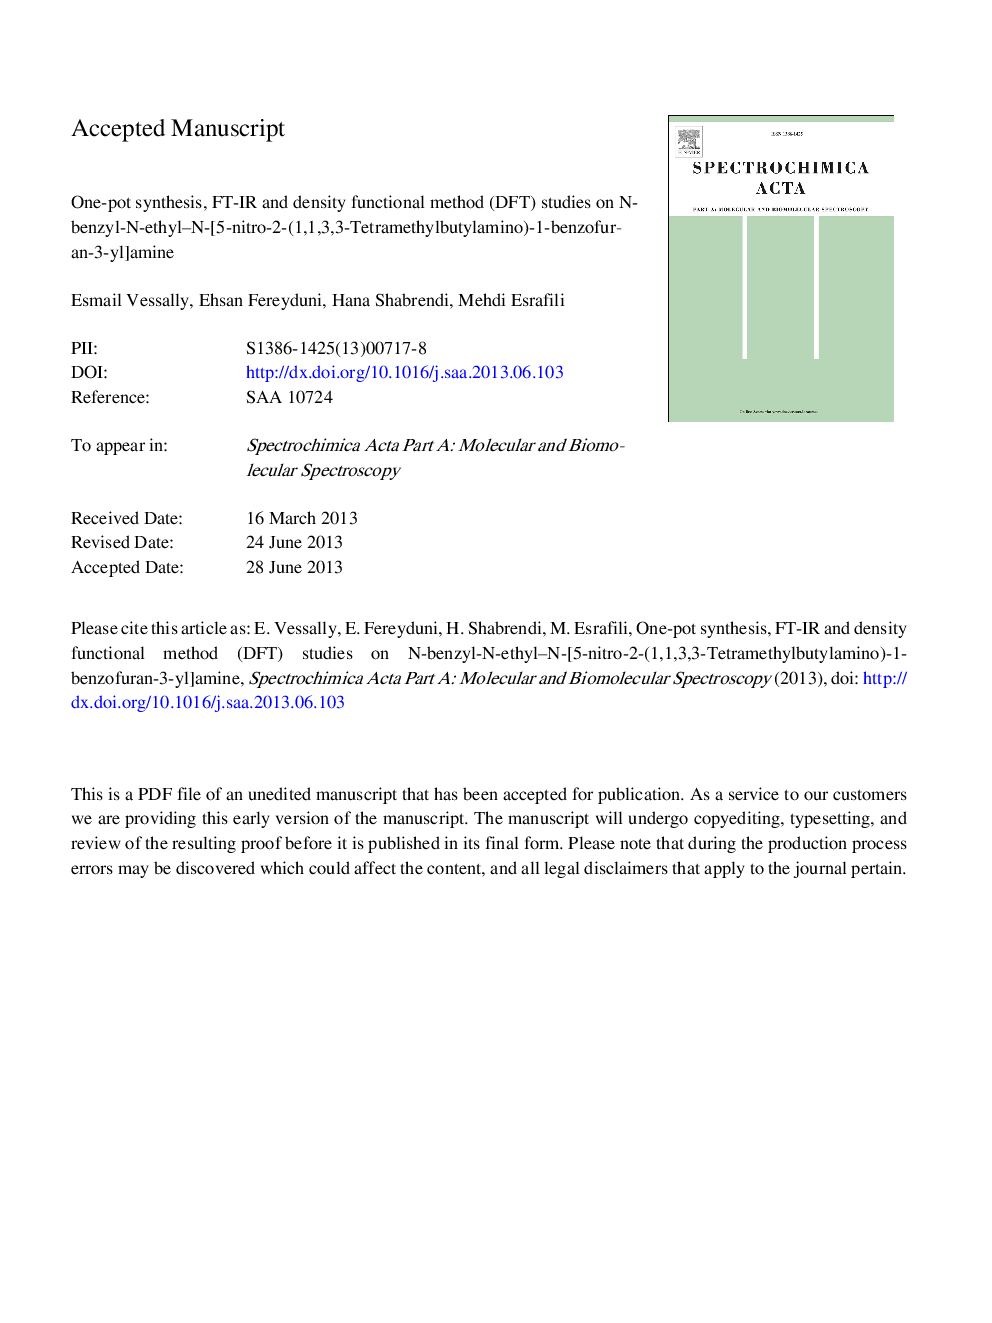 One-pot synthesis, FT-IR and density functional method (DFT) studies on N-benzyl-N-ethyl-N-[5-nitro-2-(1,1,3,3-Tetramethylbutylamino)-1-benzofuran-3-yl]amine